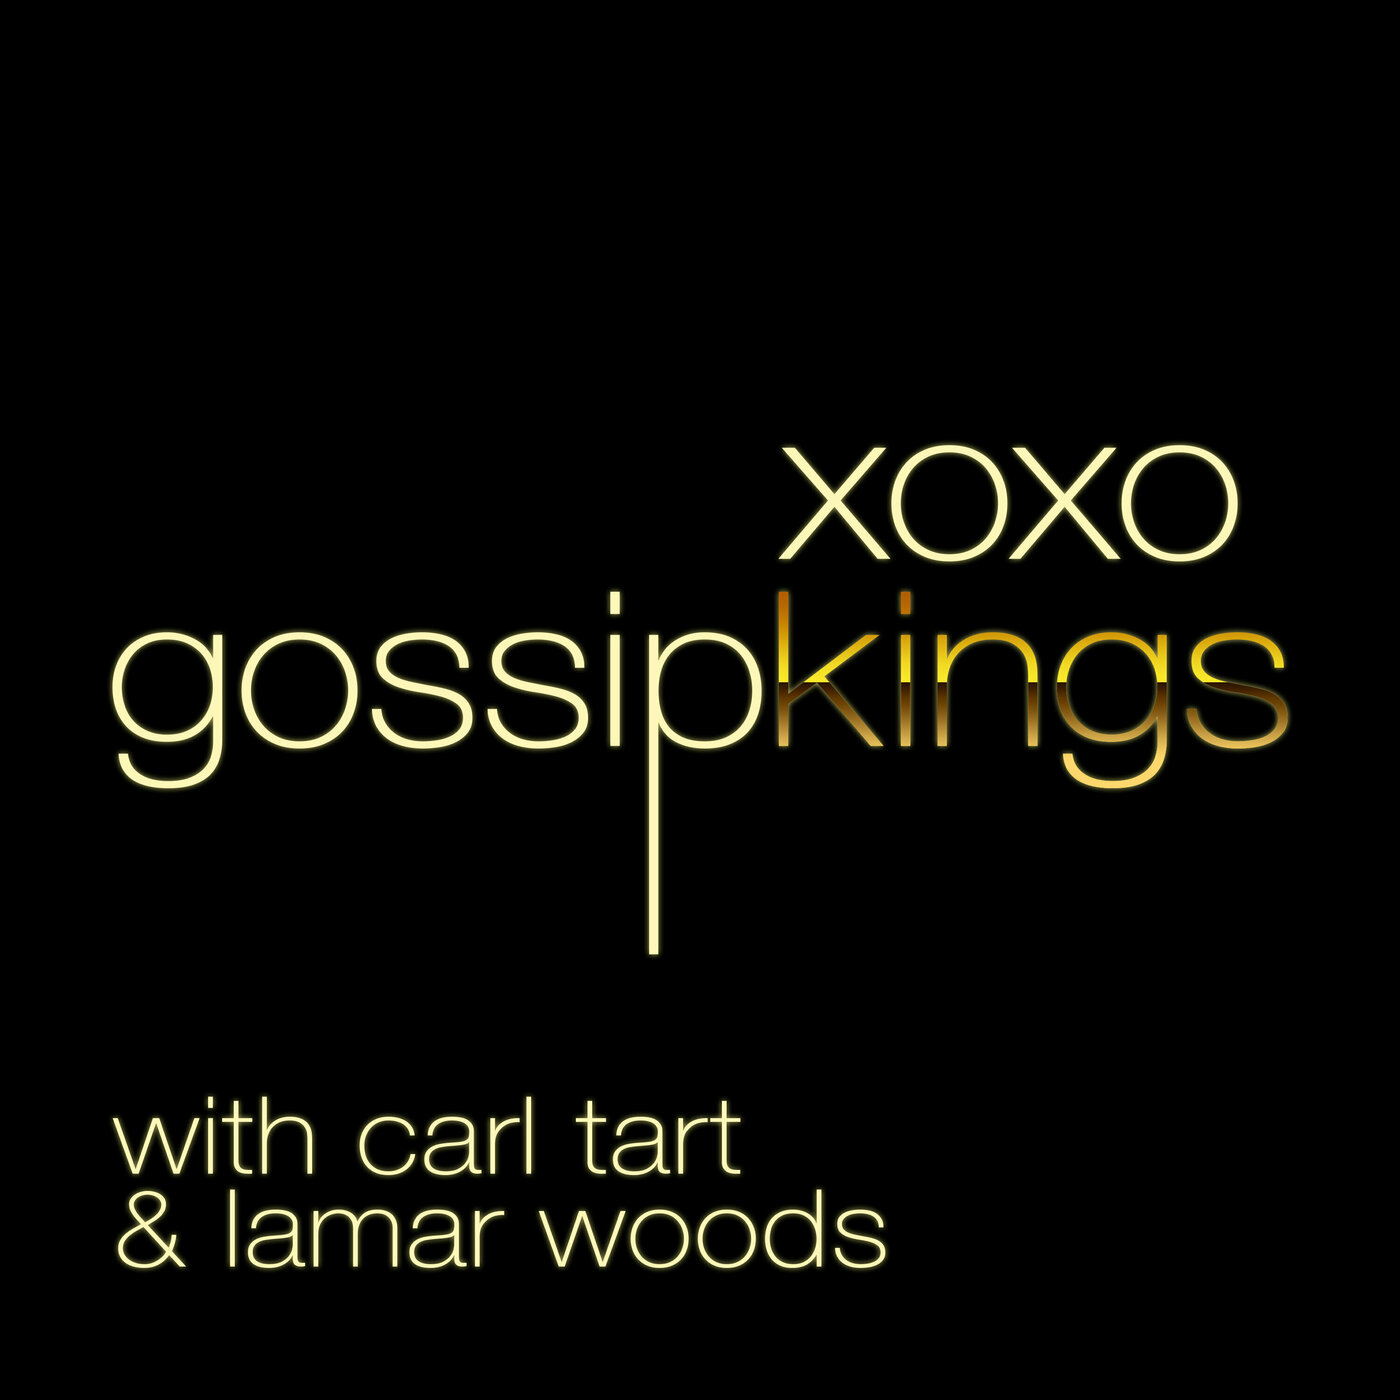 XOXO, Gossip Kings podcast show image